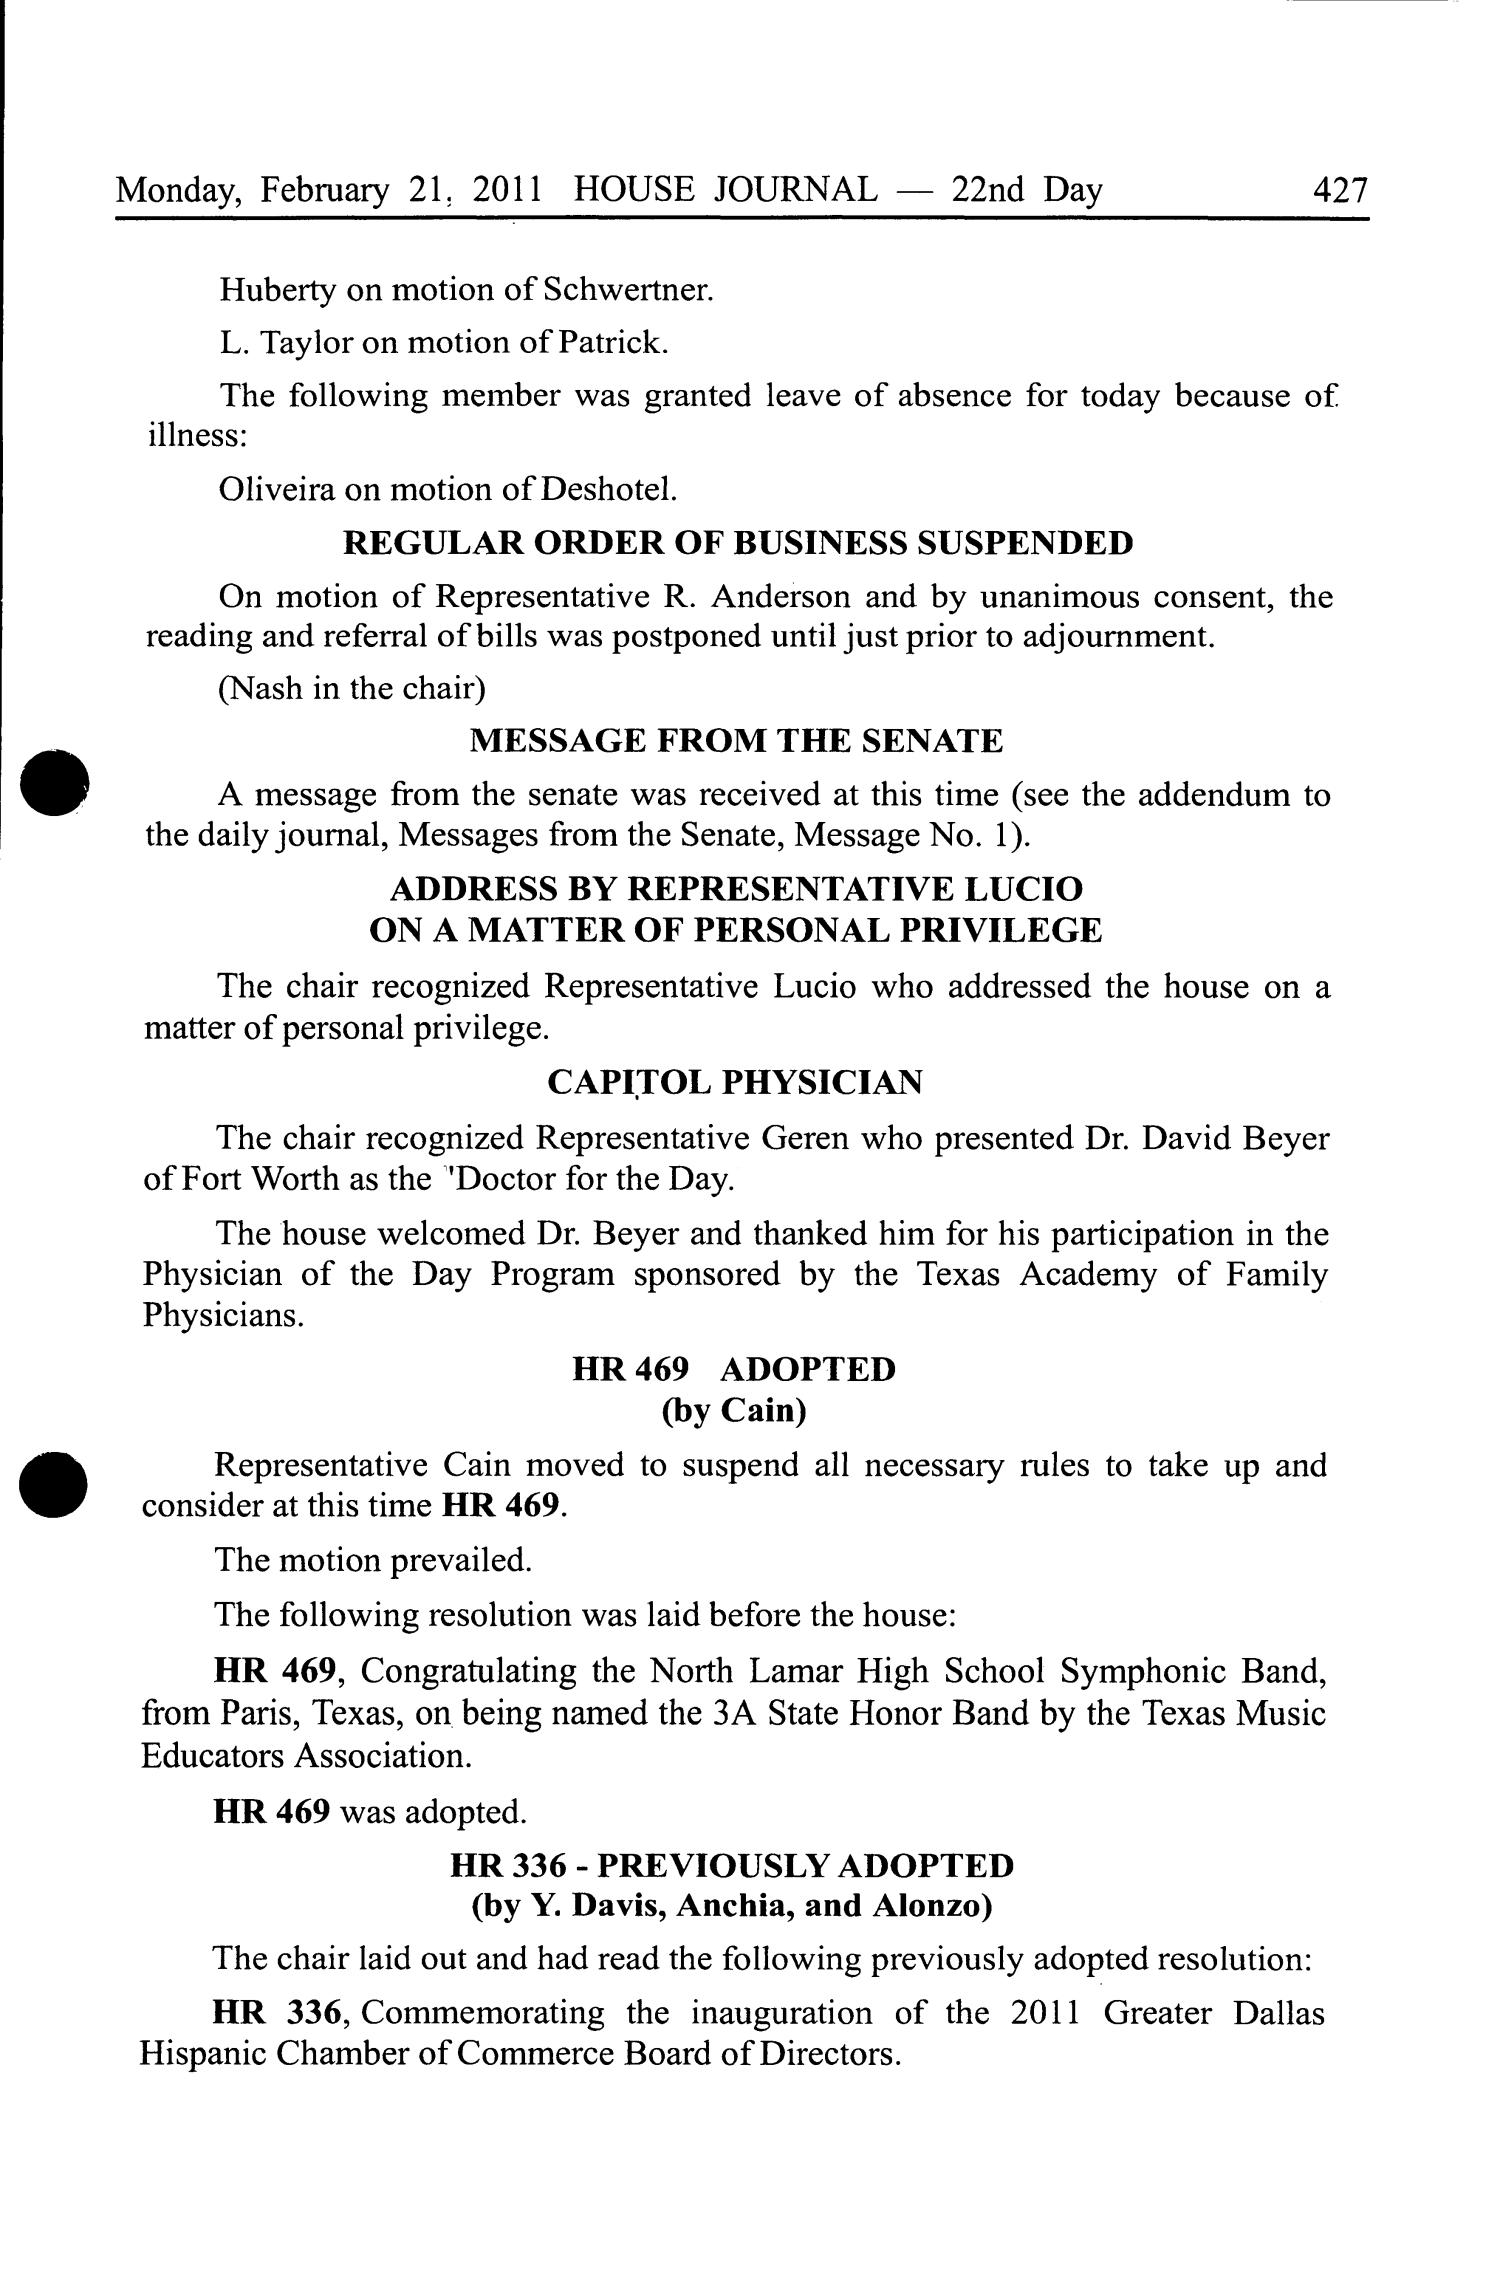 Journal of the House of Representatives of Texas: 82nd Legislature, Regular Session, Monday, February 21, 2011
                                                
                                                    427
                                                